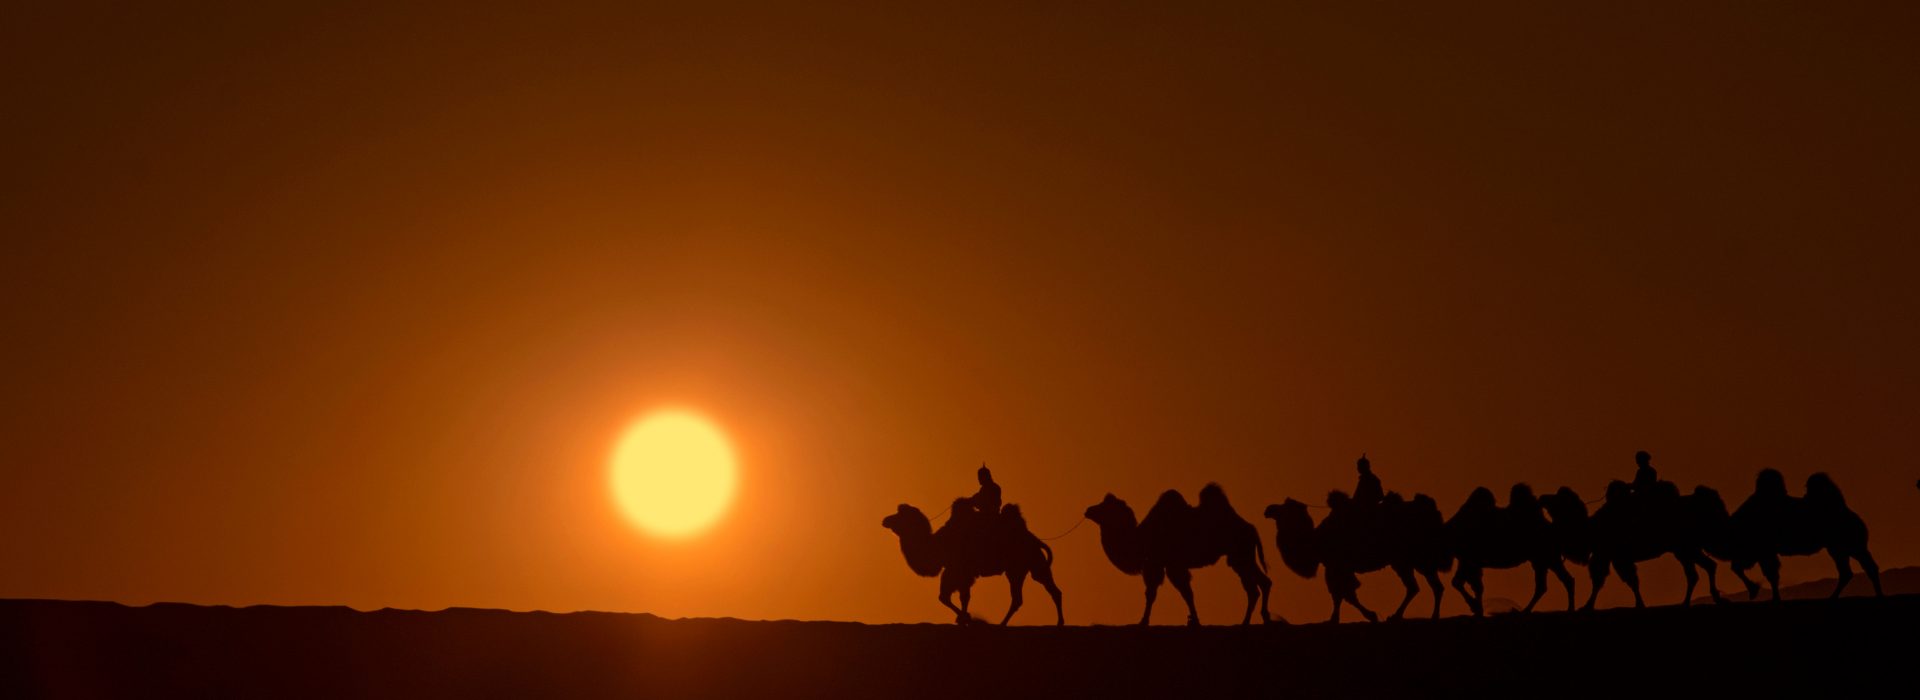 Camel-Caravan-2.jpg